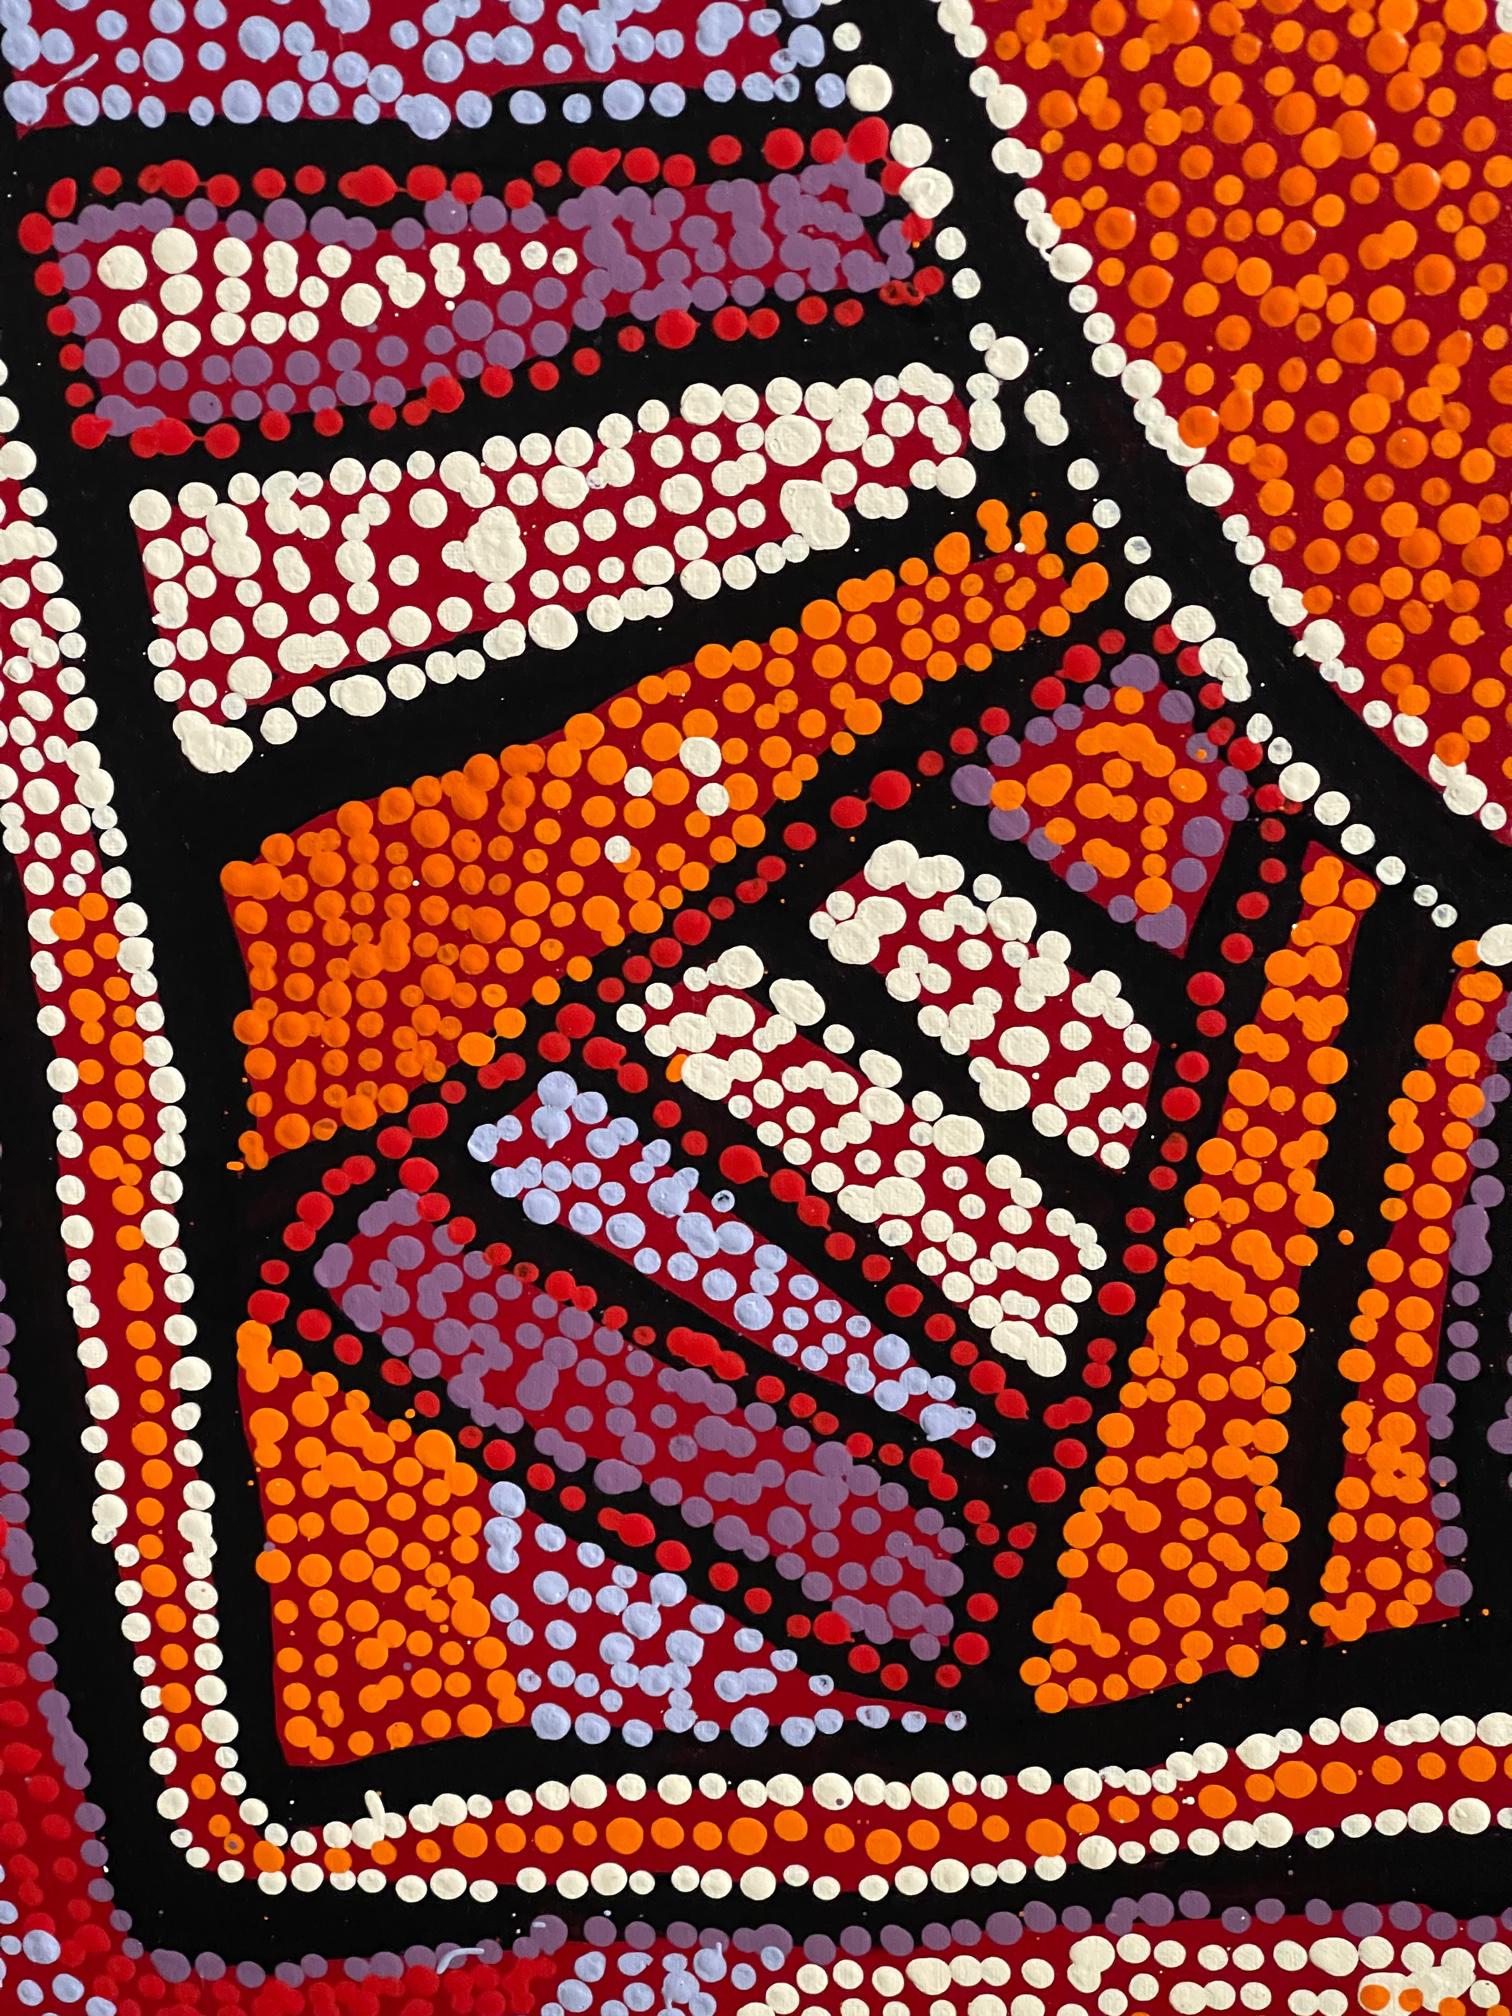 Framed Contemporary Australian Aboriginal Painting by Naata Nungurrayi 2